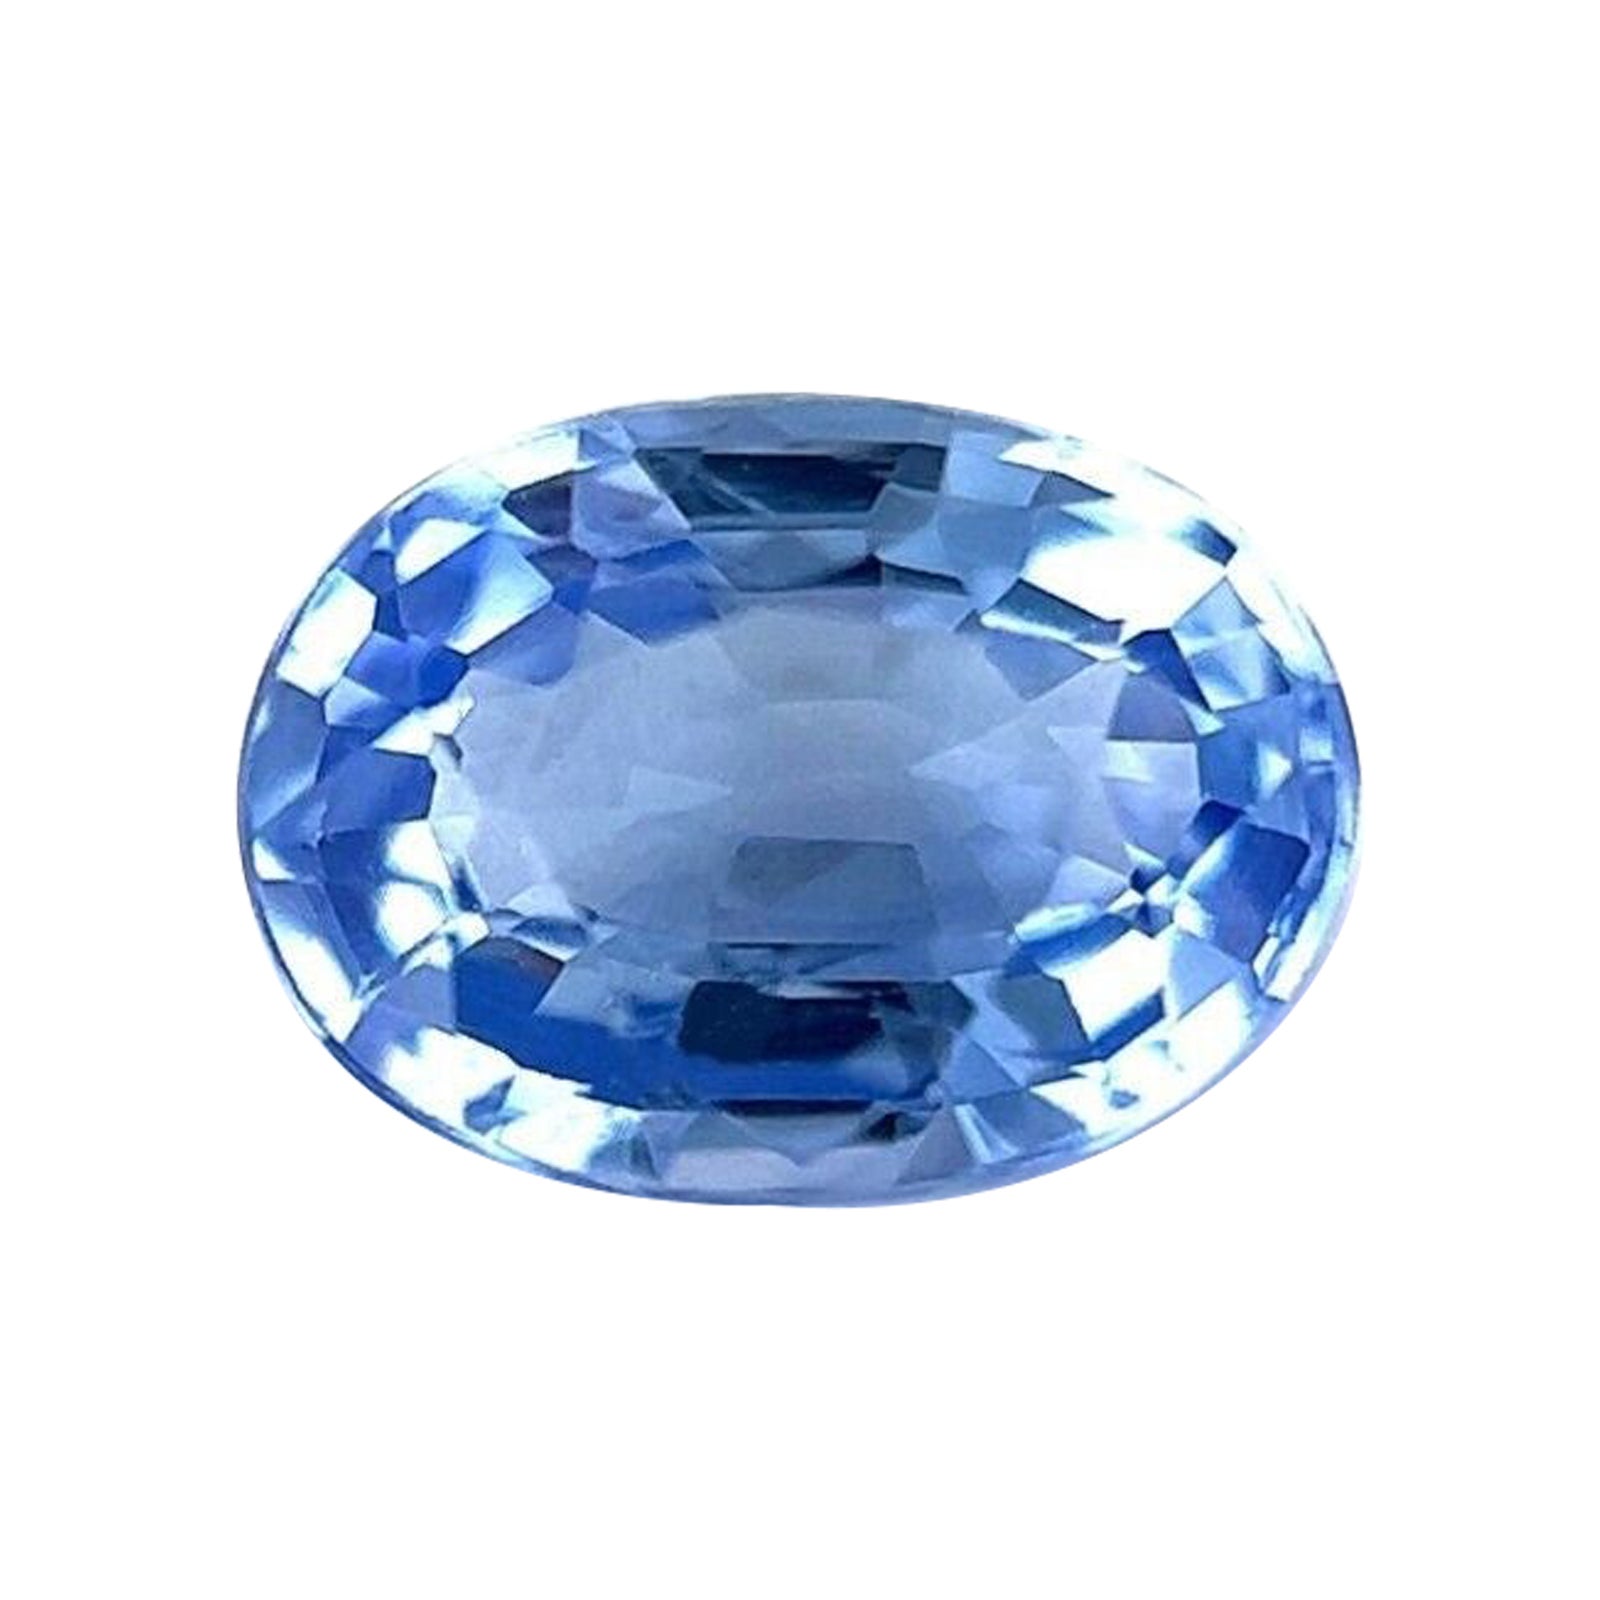 Fine pierre précieuse non sertie de Ceylan, saphir bleu de 0,85 carat, taille ovale, rare en vente